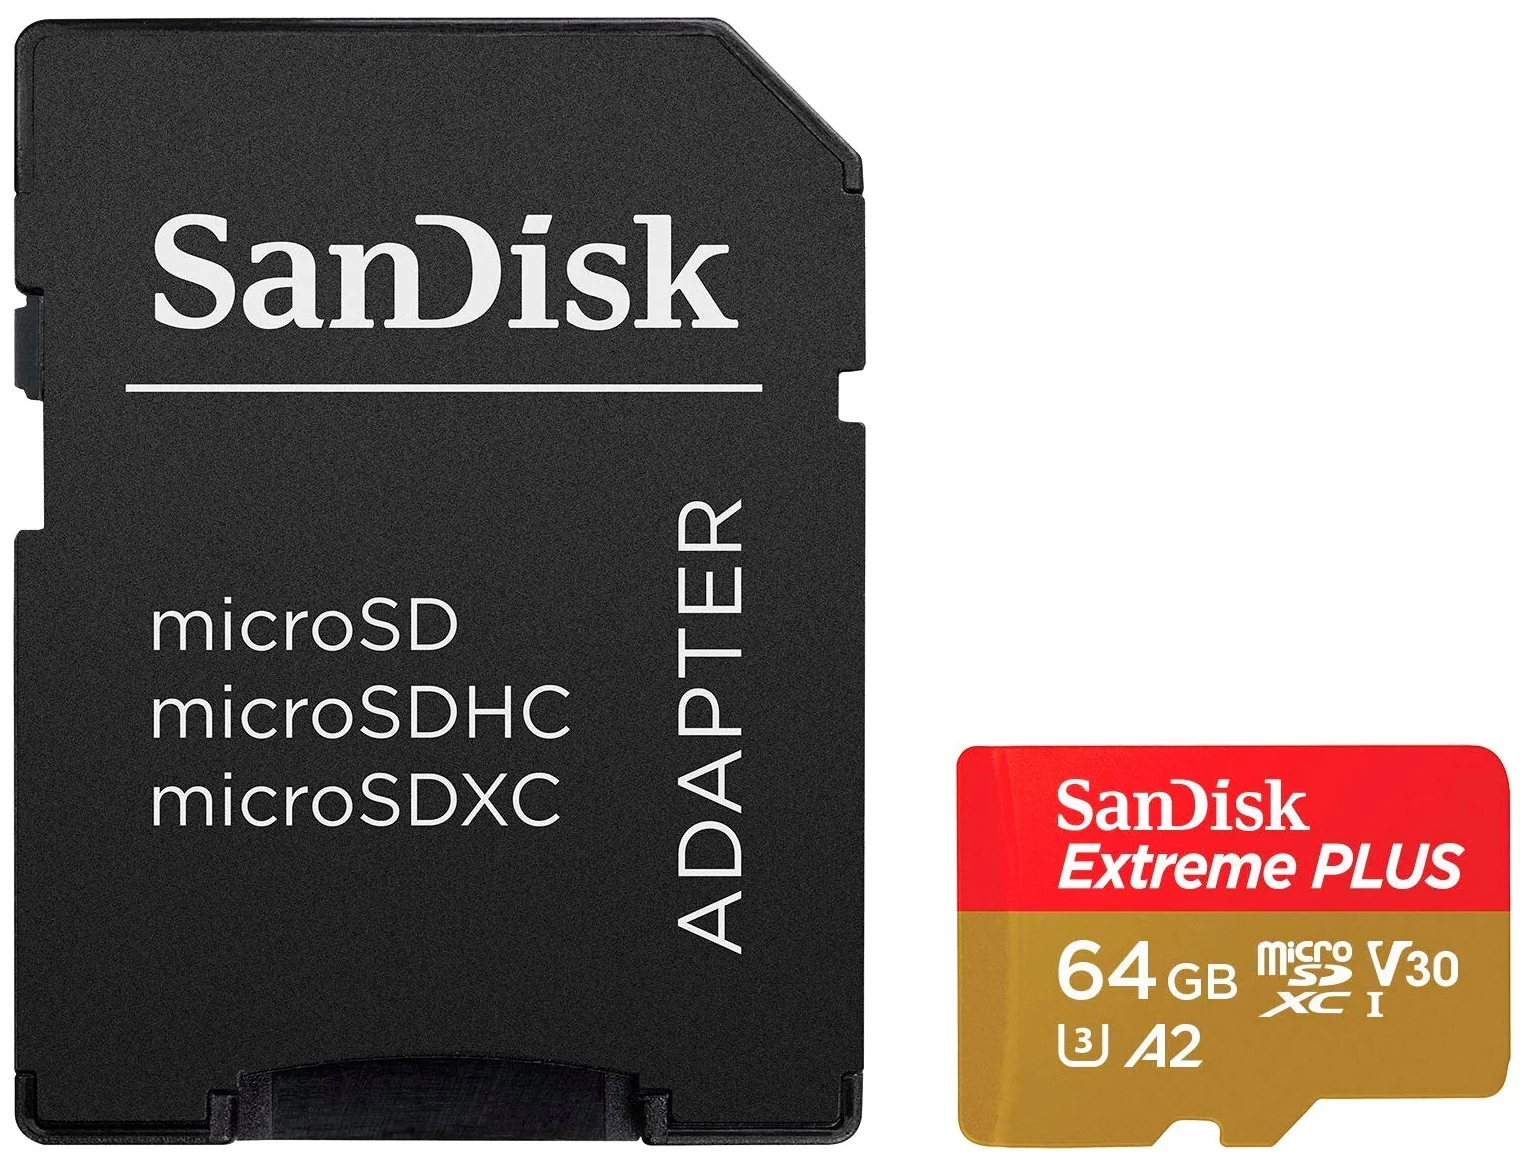 SanDisk Extreme PLUS microSDXC Class 10 UHS Class 3 V30 A2 170MB/s + SD adapter - поддержка UHS: UHS Class 3, UHS-I